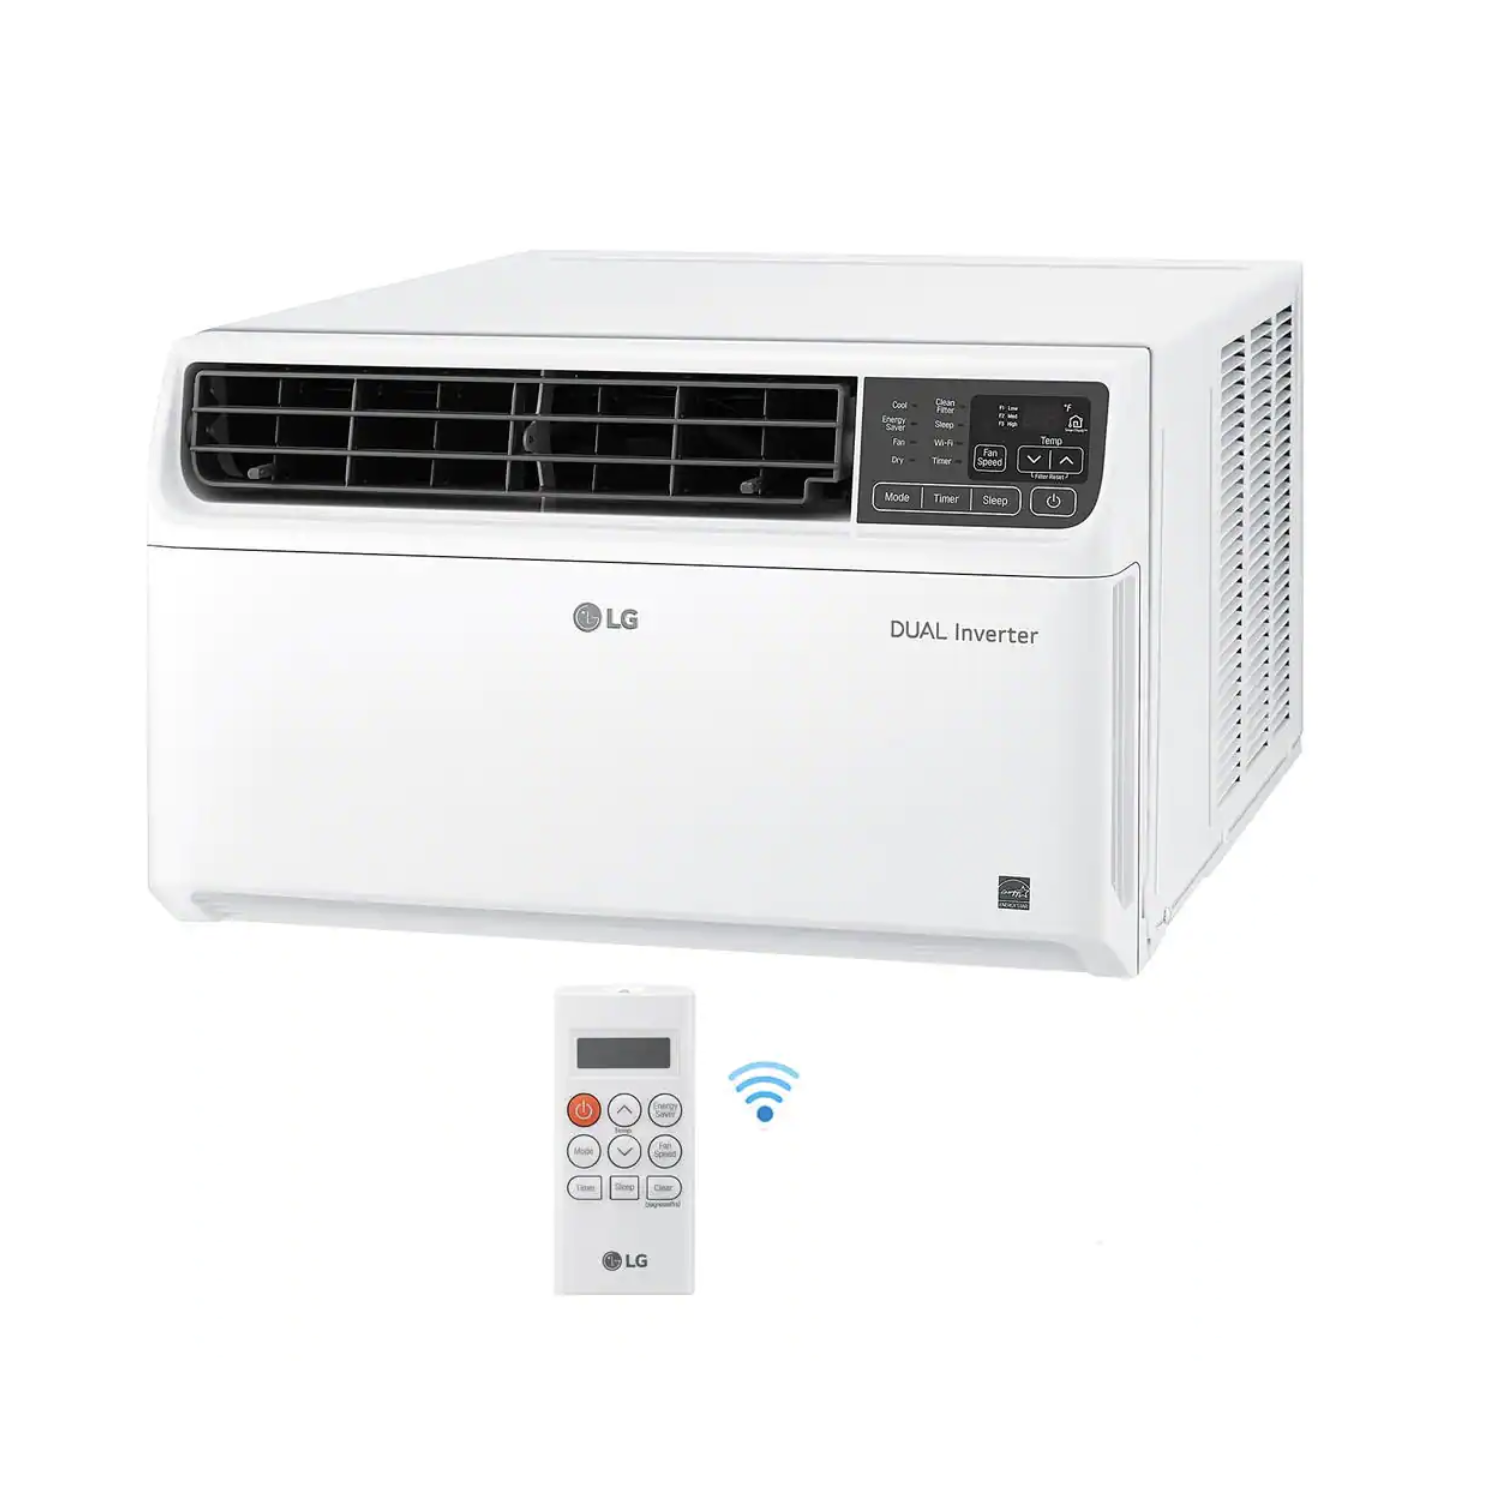 LG 14,000 BTU Dual Inverter Smart Window Air Conditioner, Cools 800 Sq. Ft, Ultra Quiet, Up to 25% Savings, Energy Star, Works ThinQ, Amazon Alexa Hey Google 115V - (LW1522IVSM)